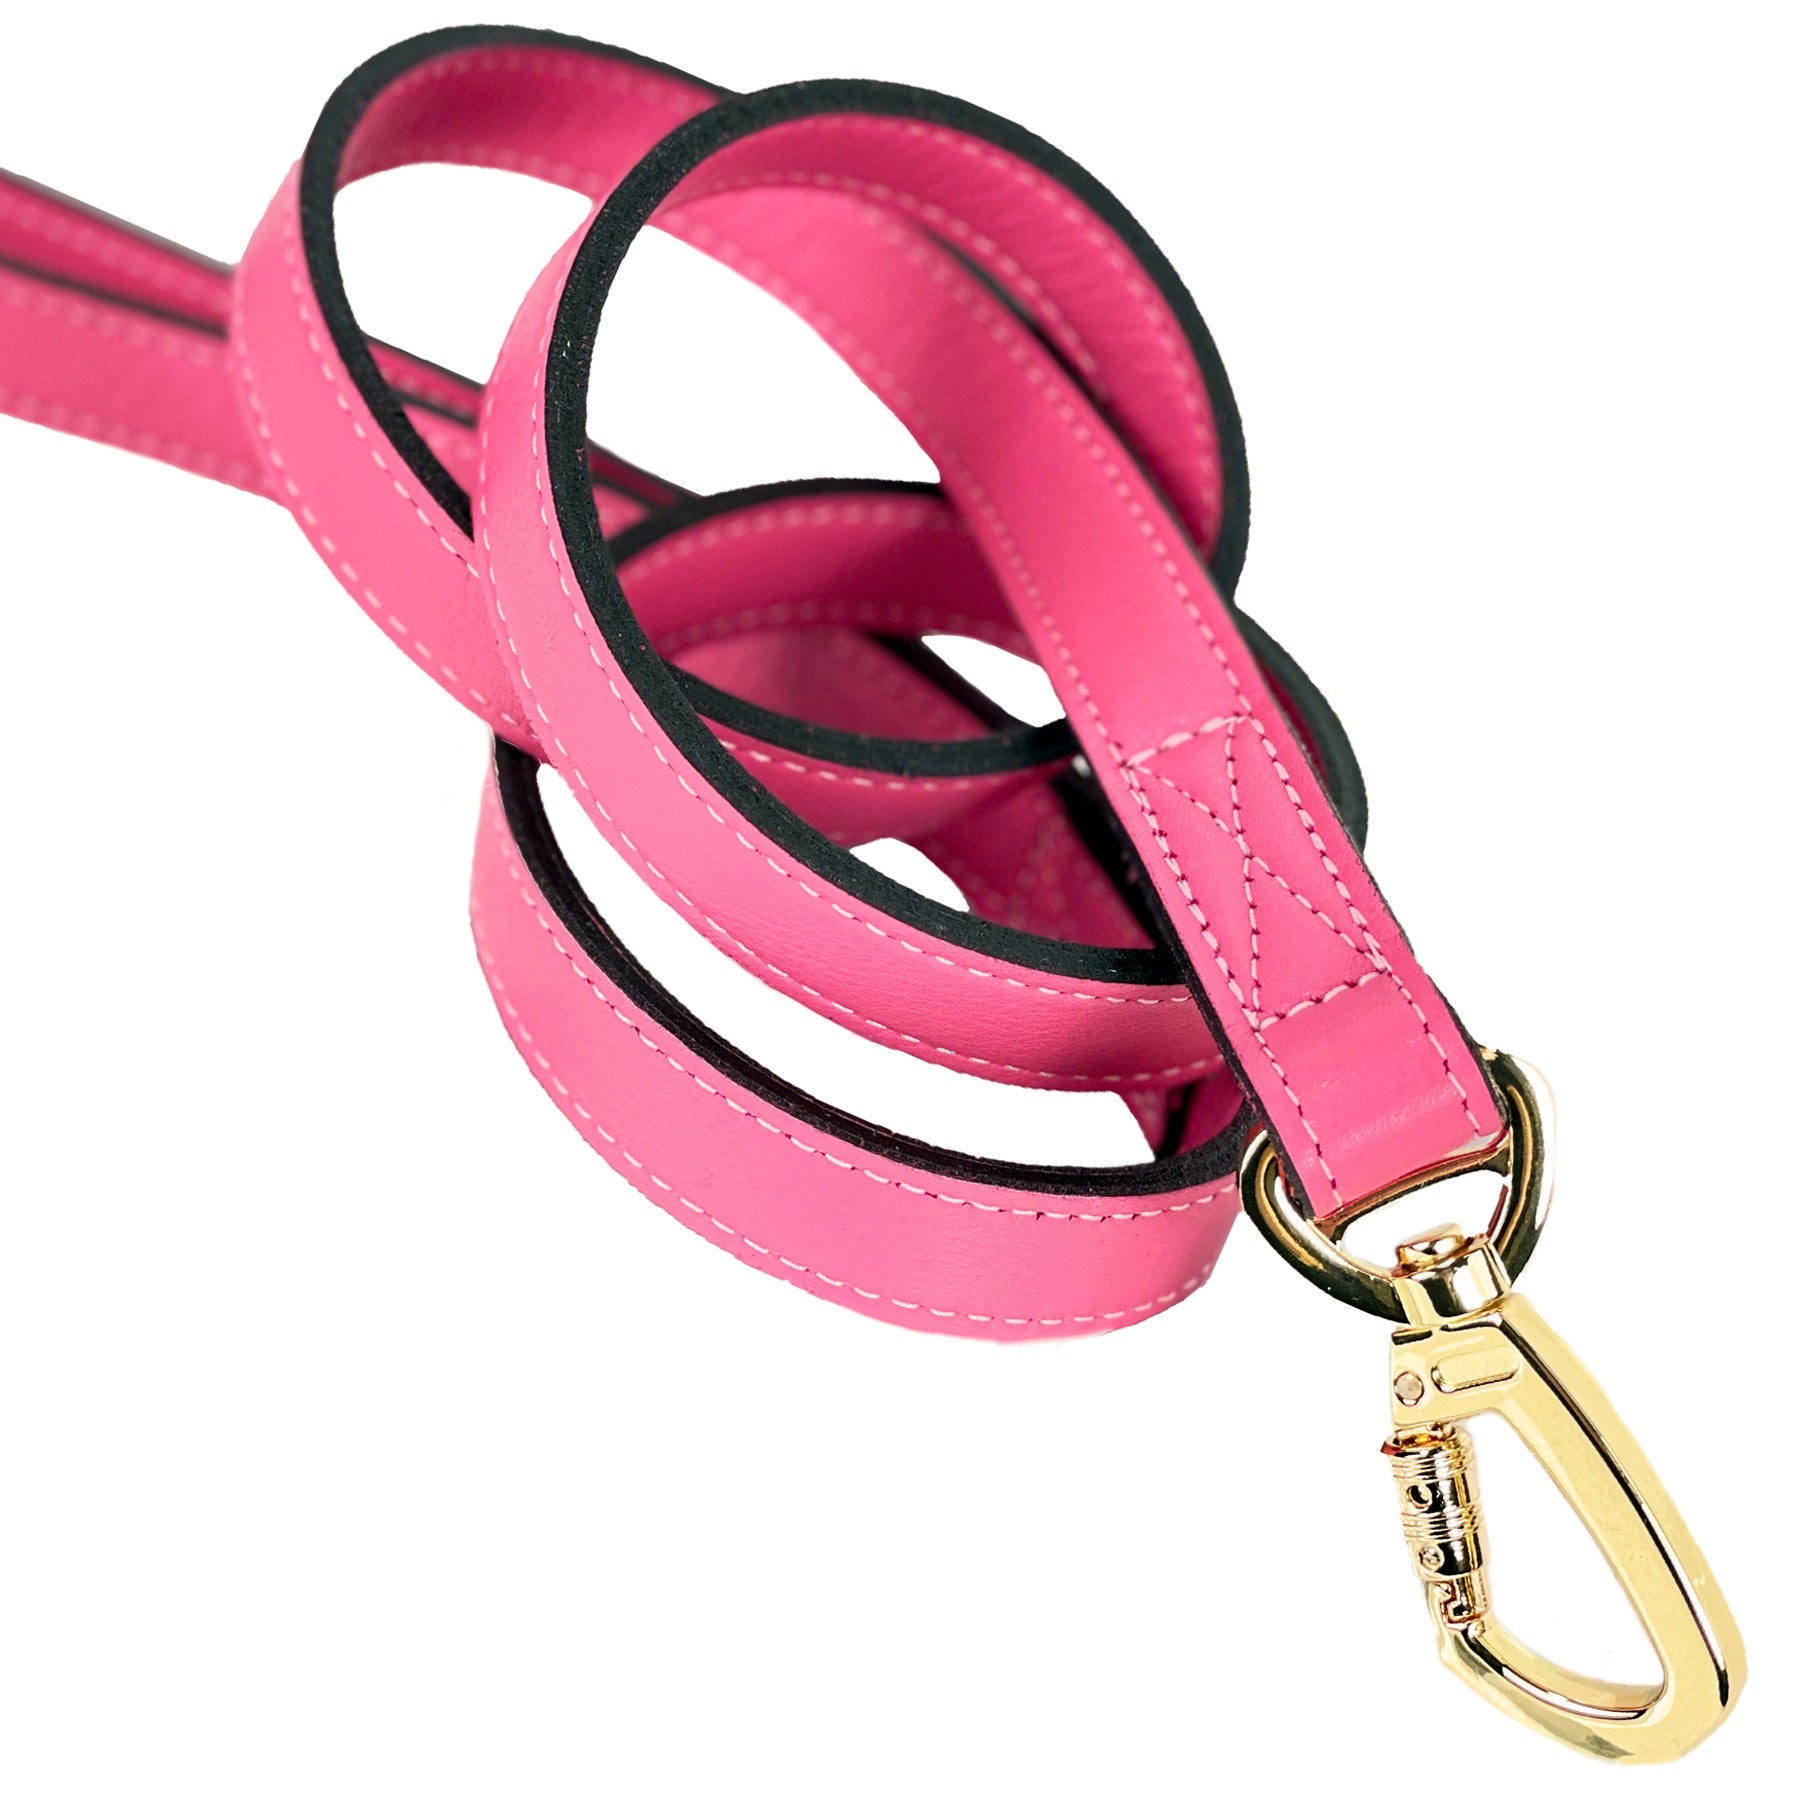 Royal Dog Leash in Petal Pink & Gold